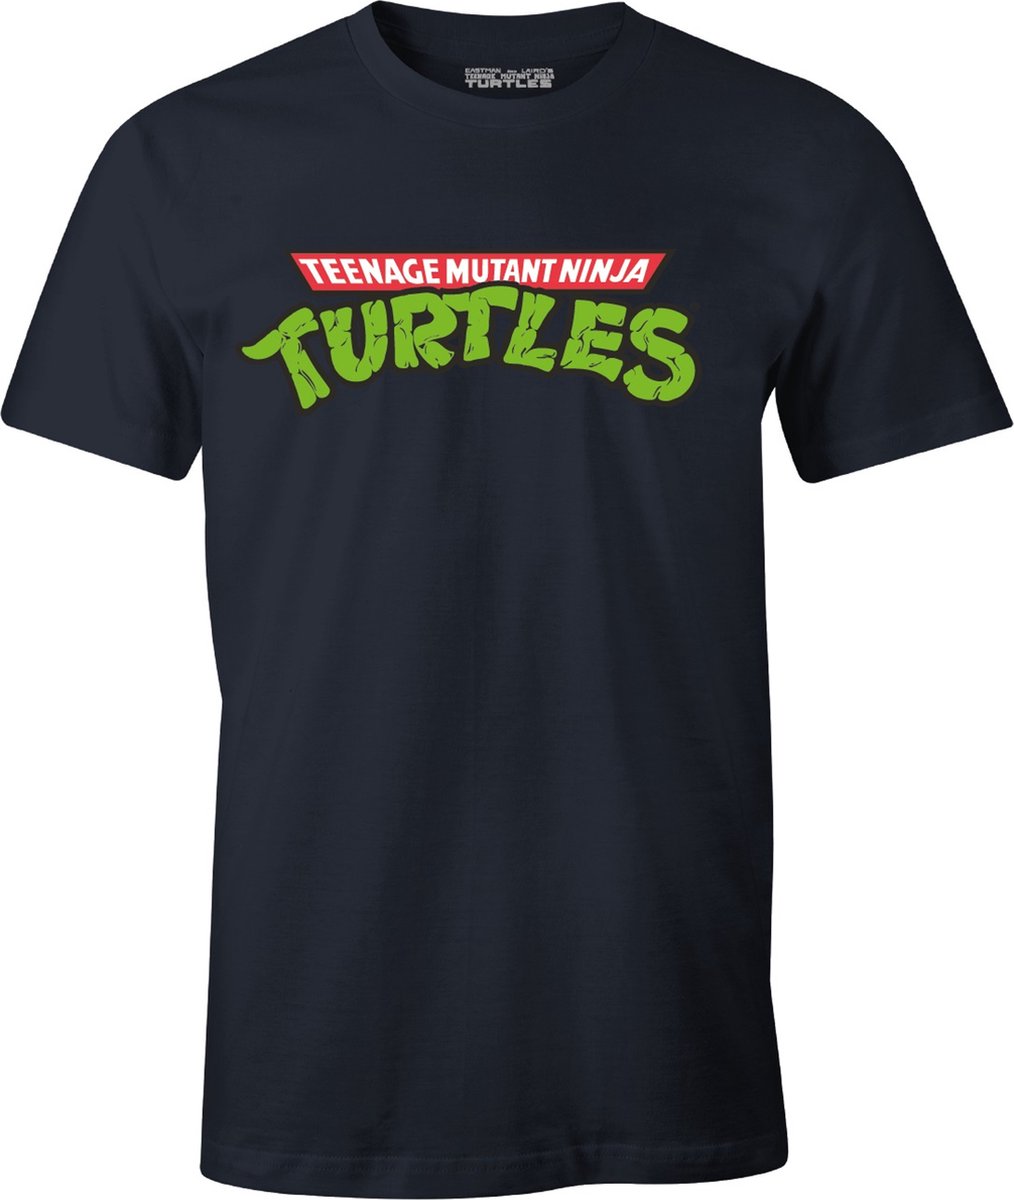 Teenage Mutant Ninja Tutles - Logo T-shirt (M)